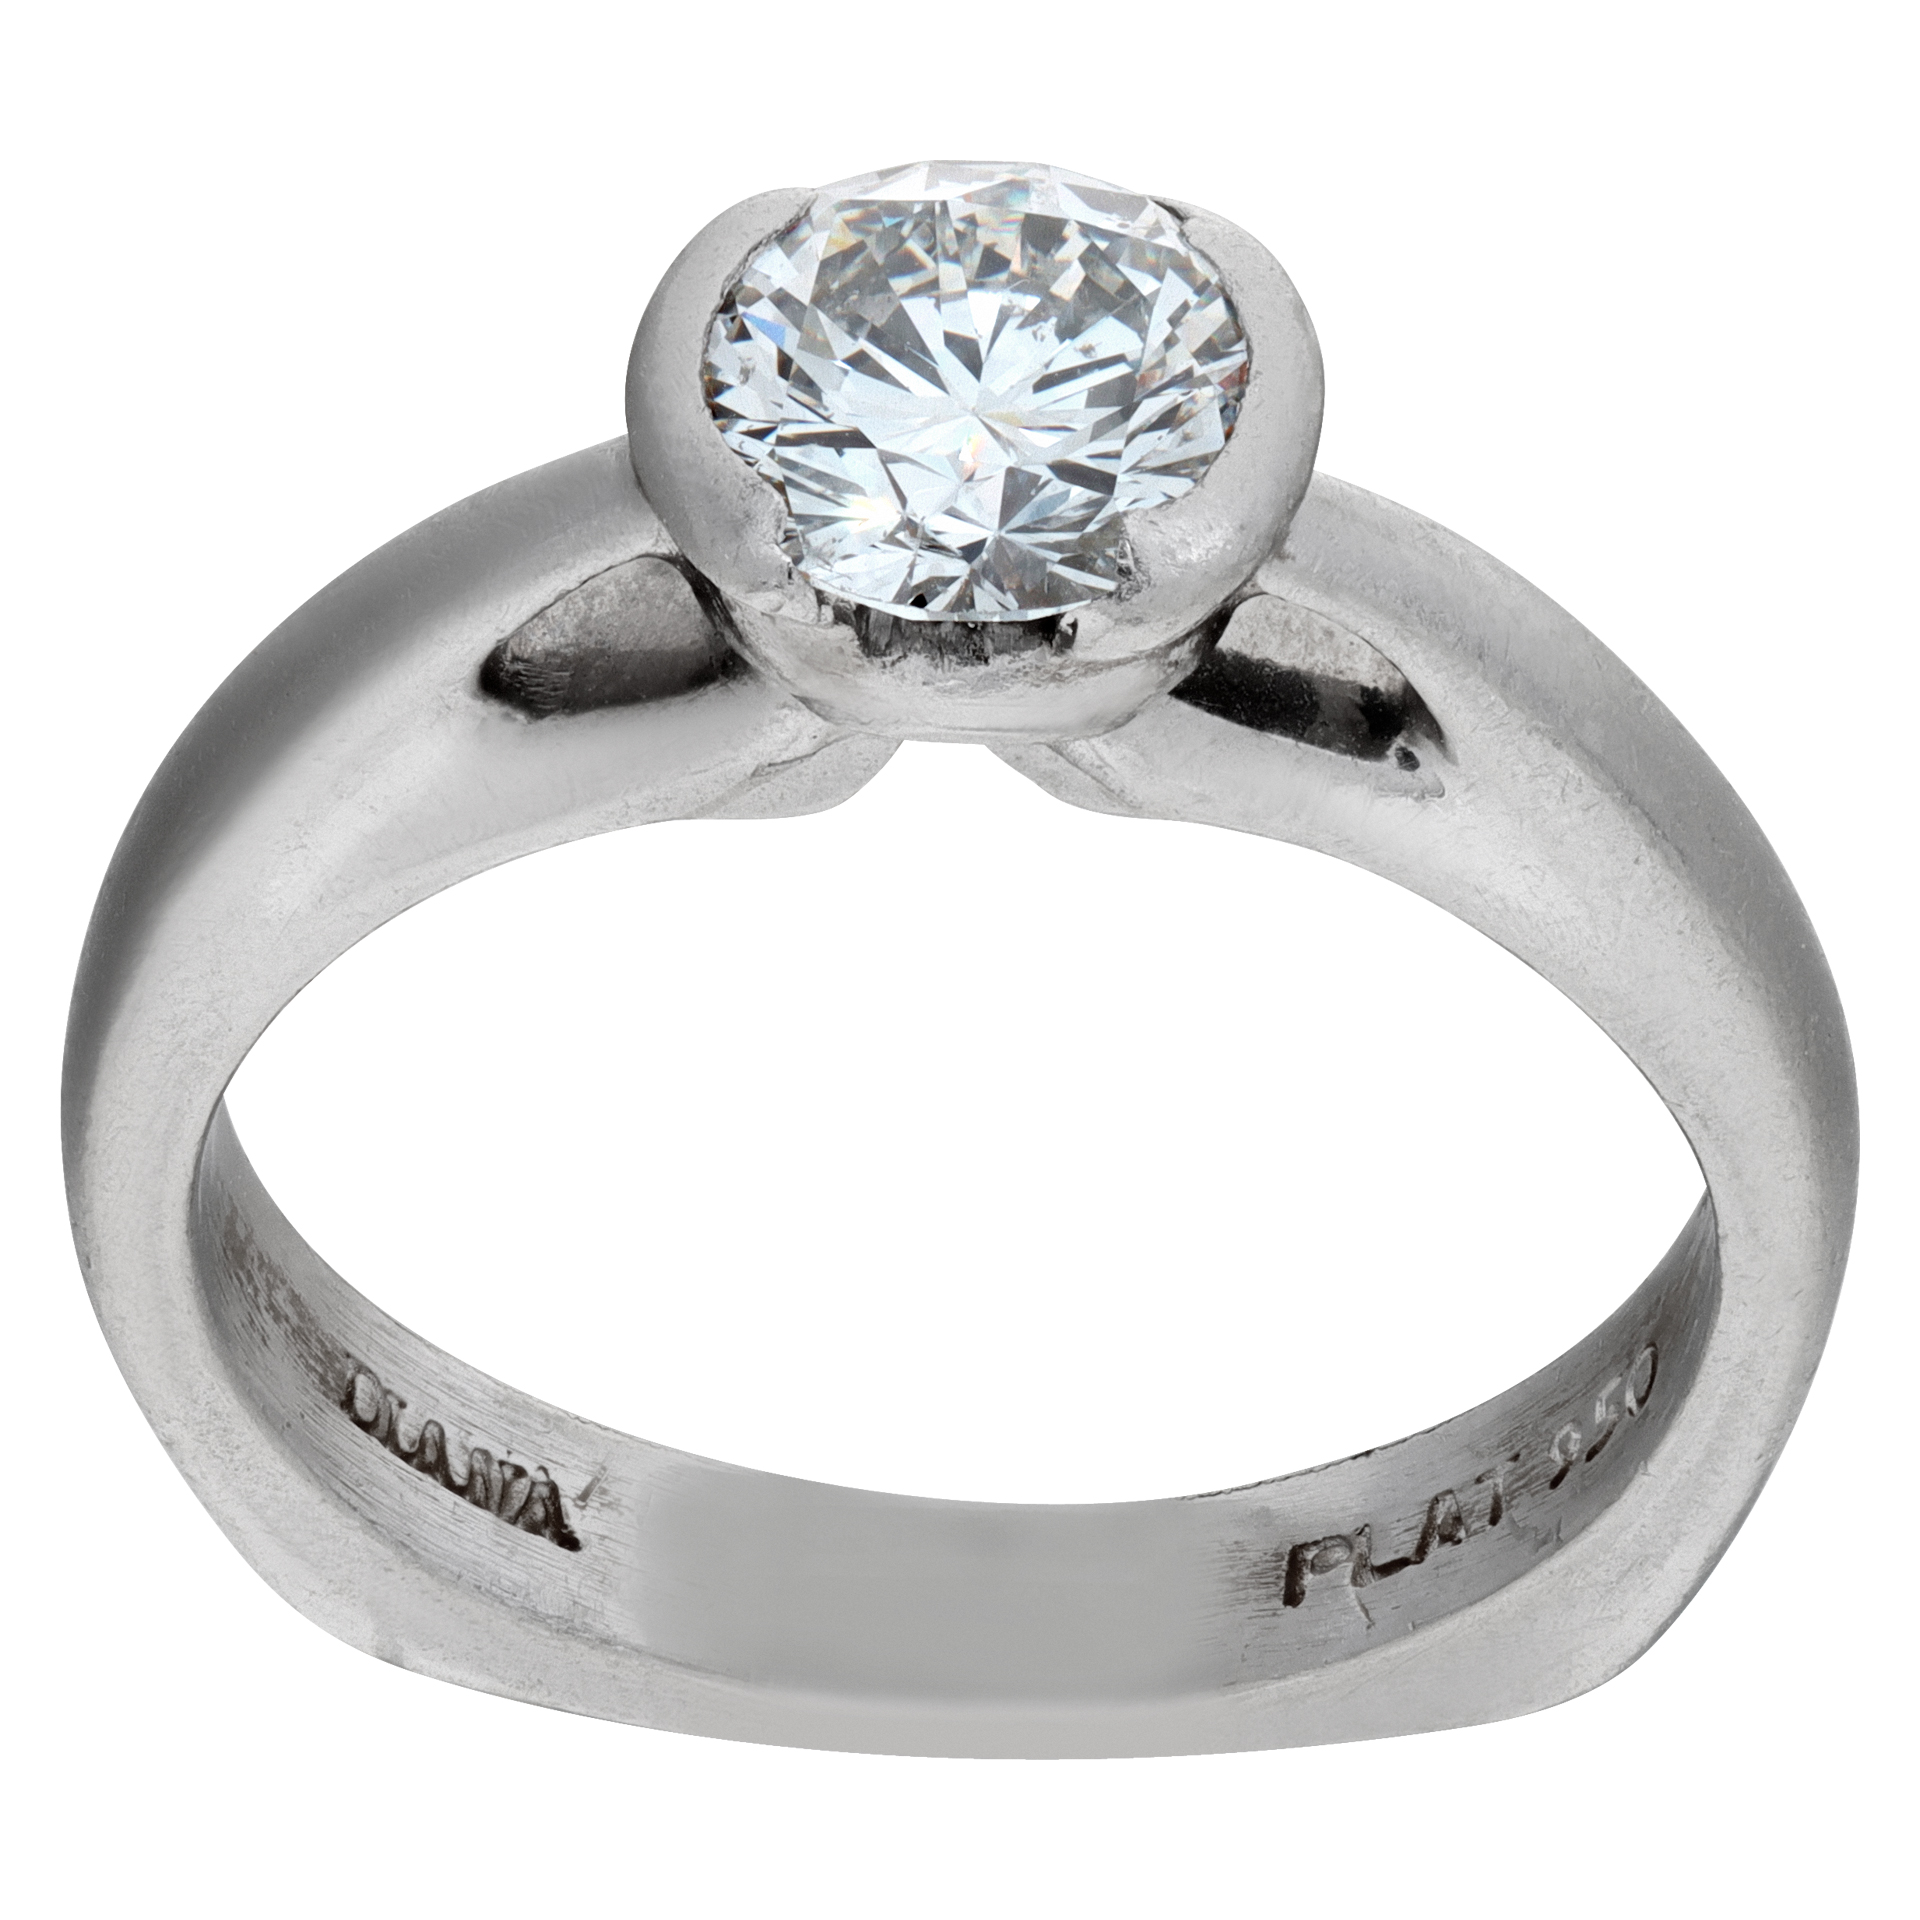 GIA certified round brilliant cut diamond 1.05 carat (H color, SI2 clarity) ring (Stones)